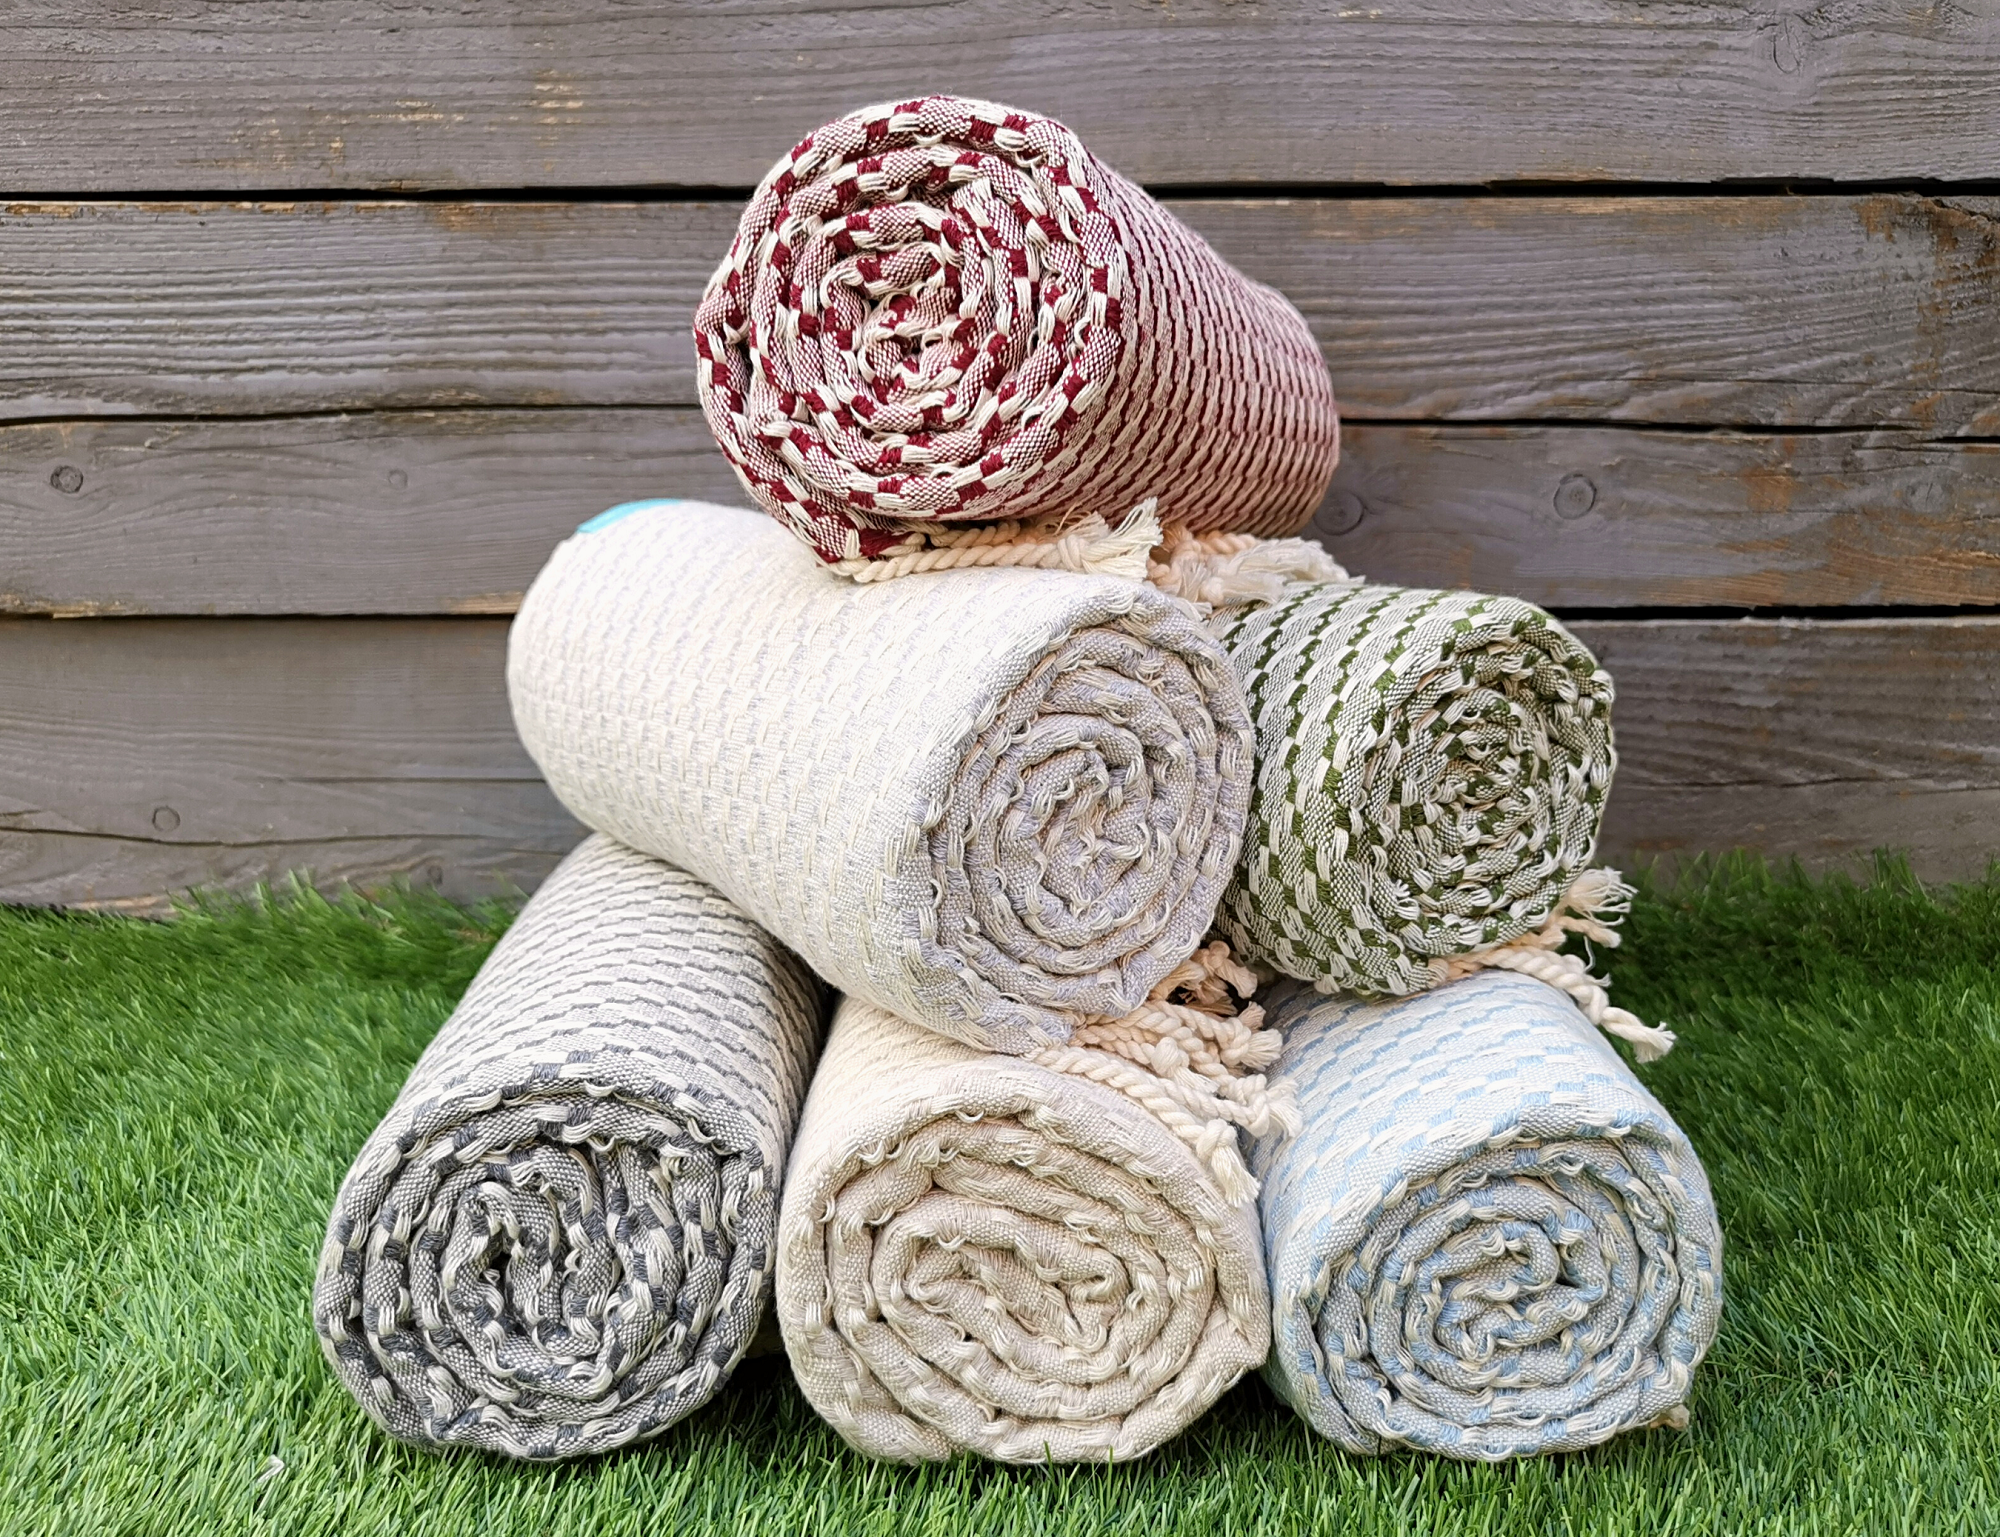 Best Organic Turkish Towels  Buy Organic Turkish Towels Wholesale